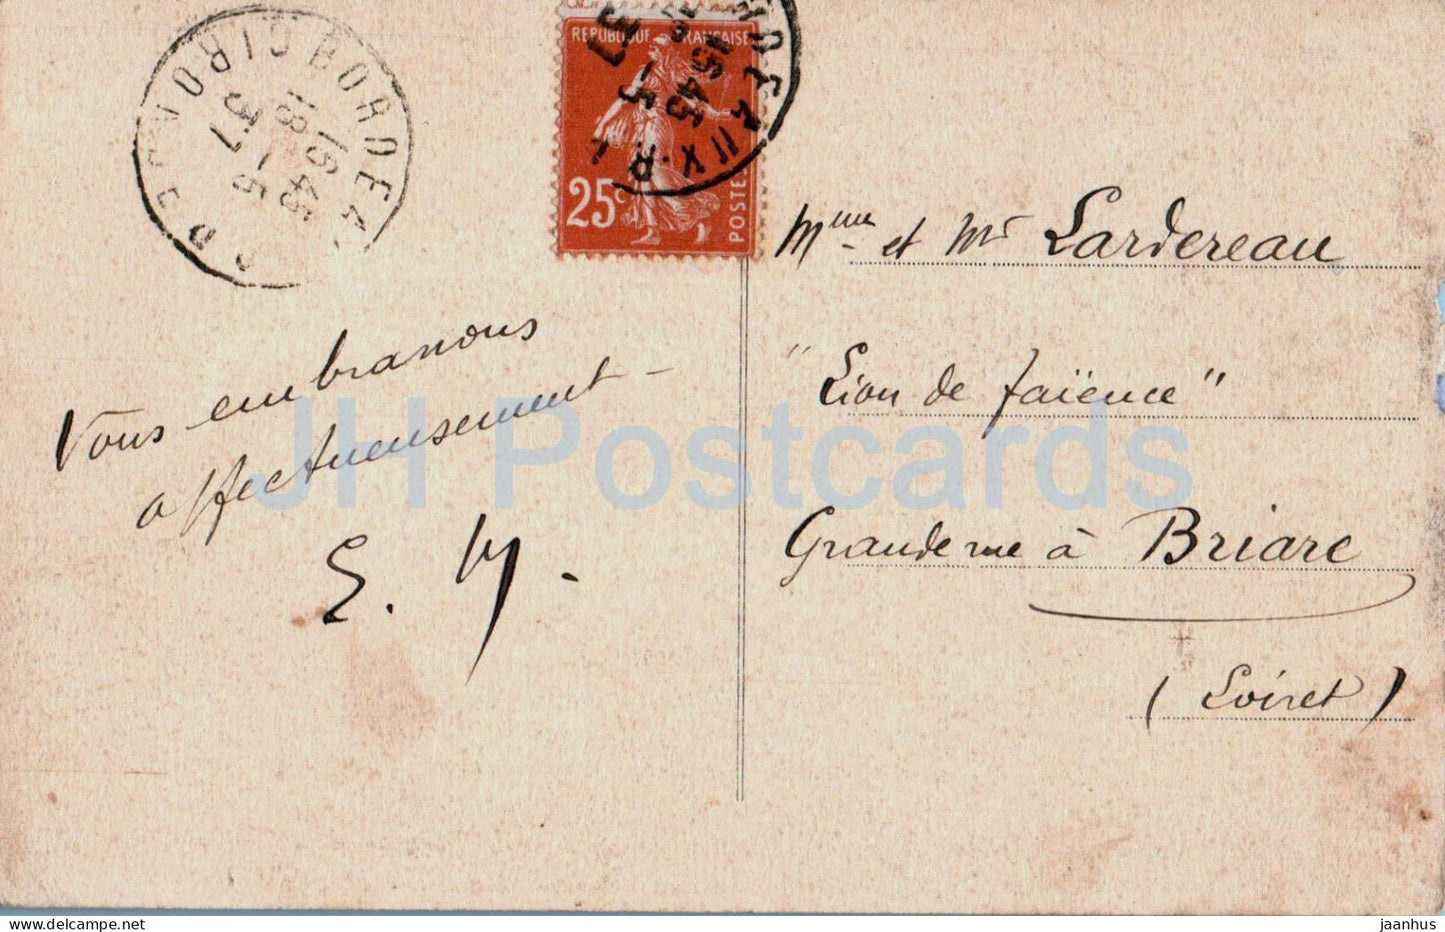 Bordeaux - L'Eglise Sainte Croix - Kirche - alte Postkarte - 1937 - Frankreich - gebraucht 